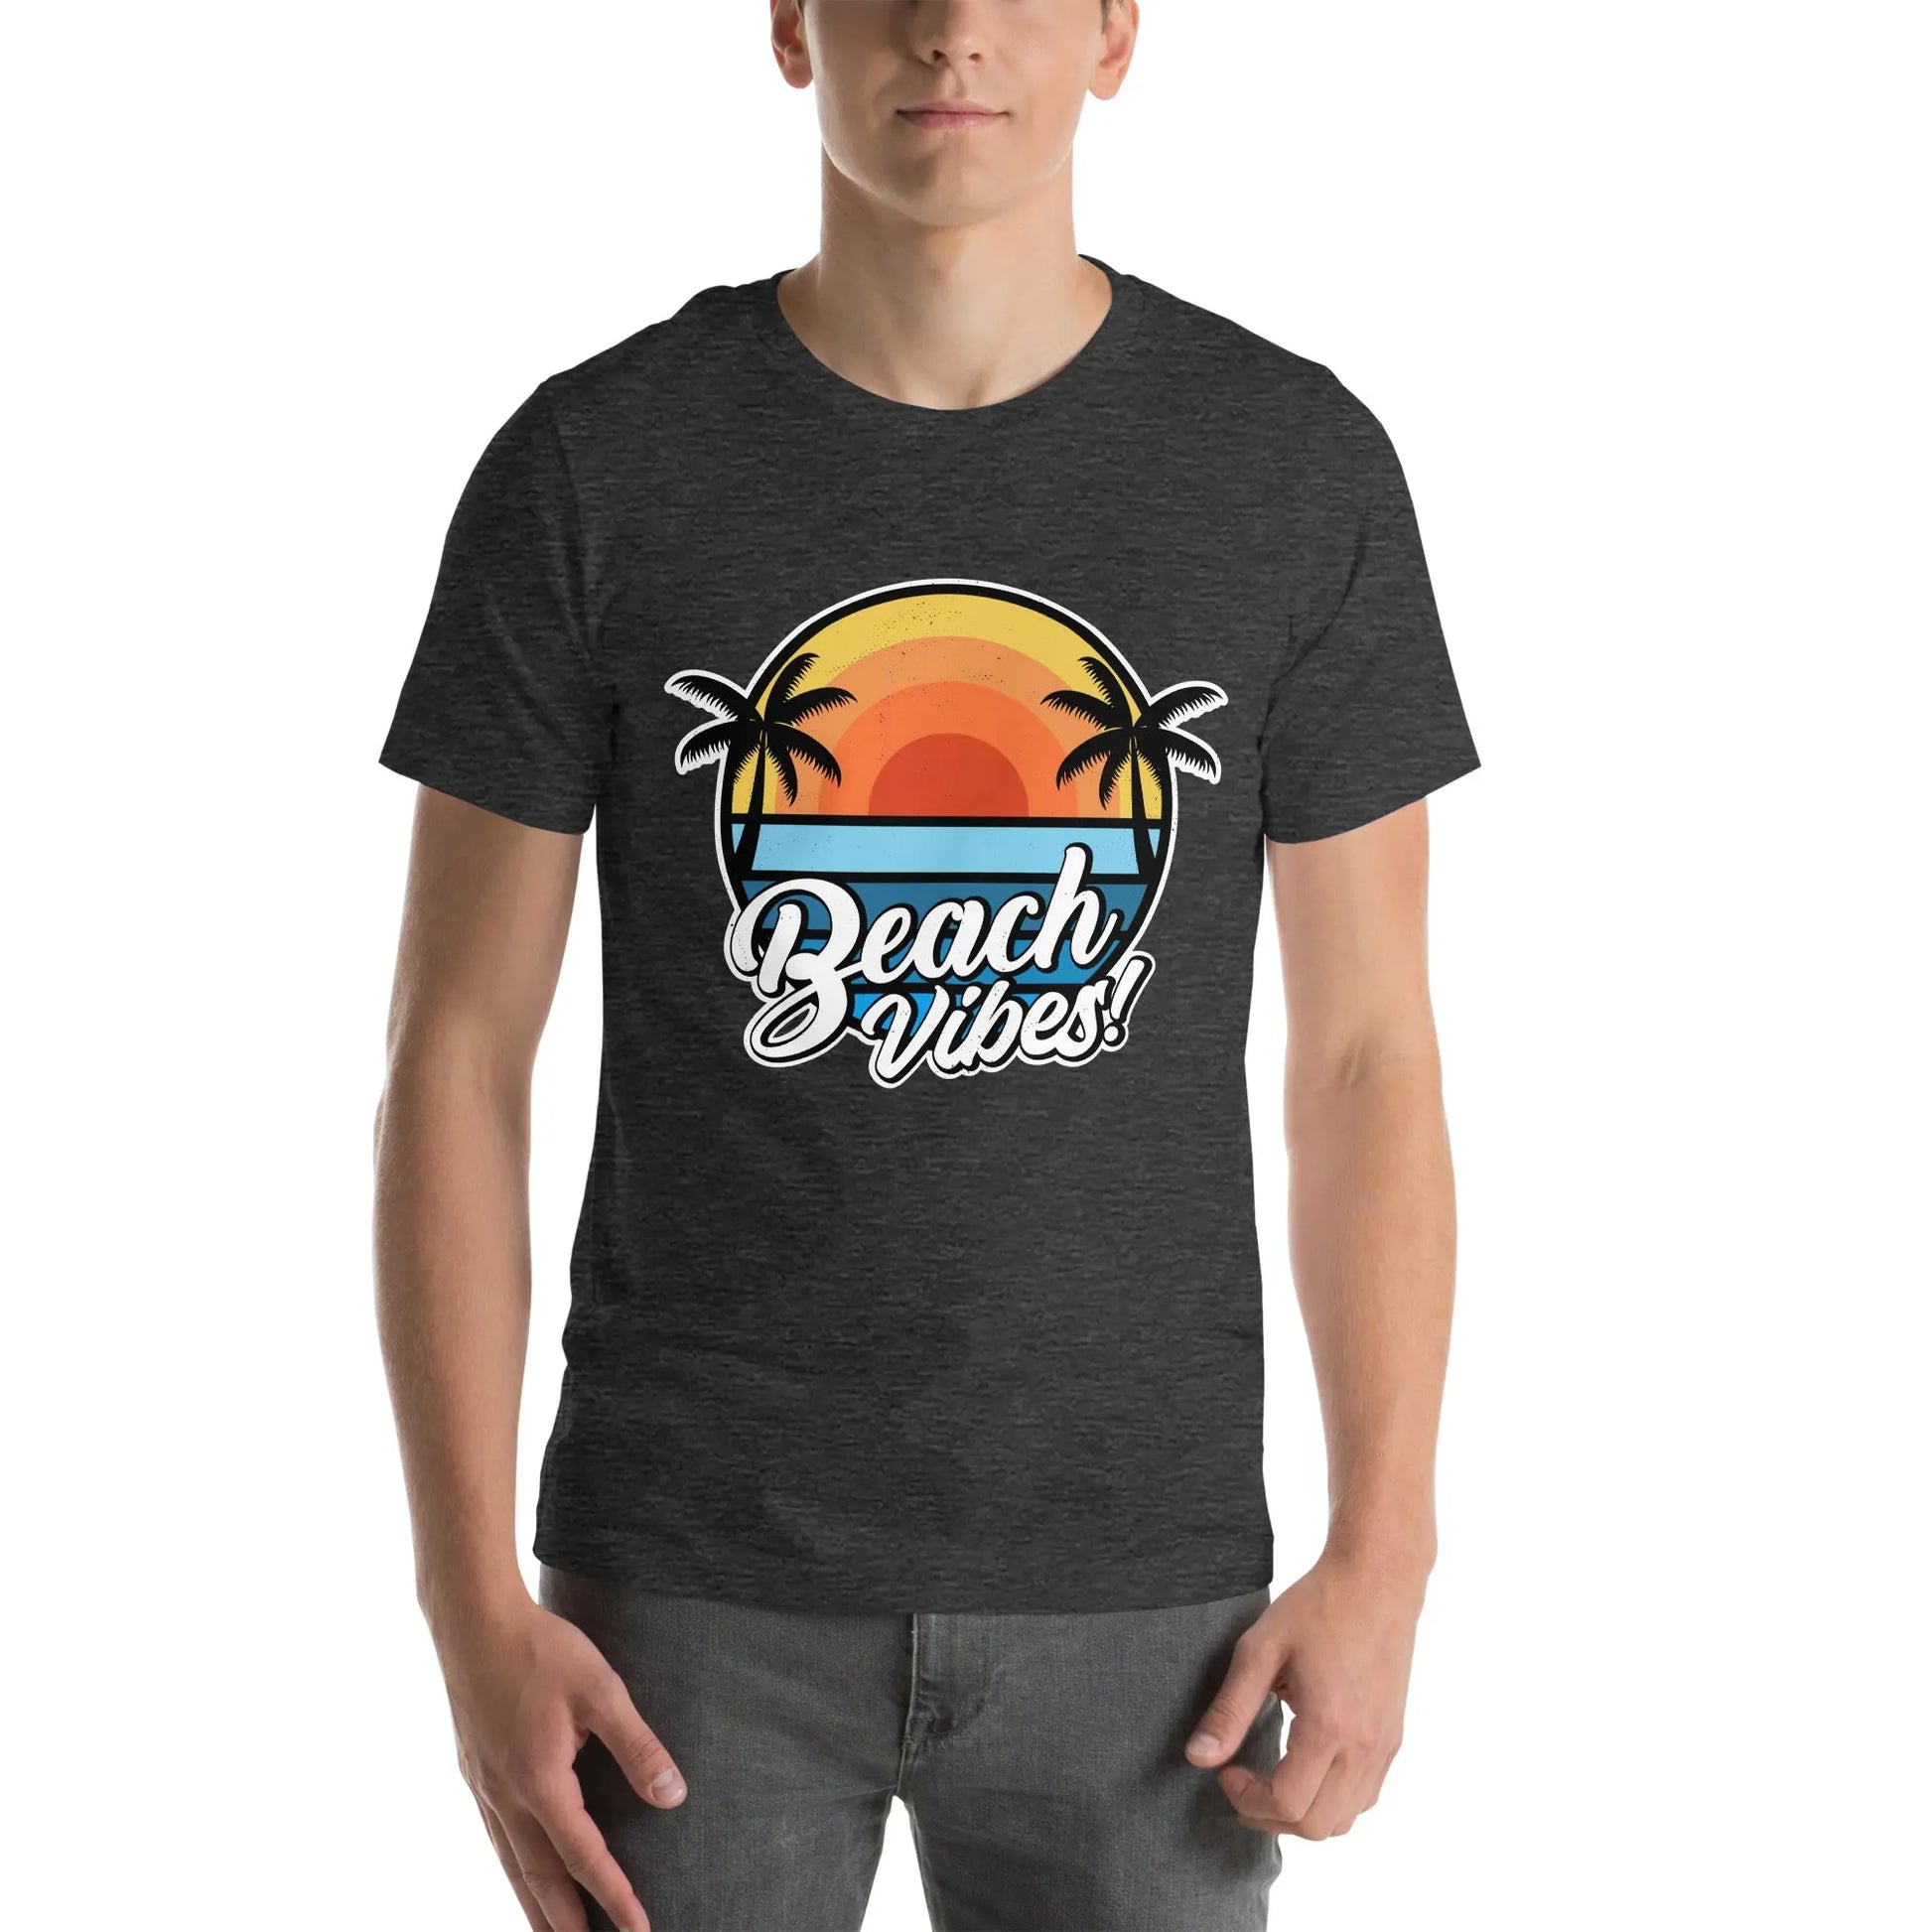 Beach Vibes with this Coastal Adult Unisex T-Shirt - Coastal Journeyz9496443_8460